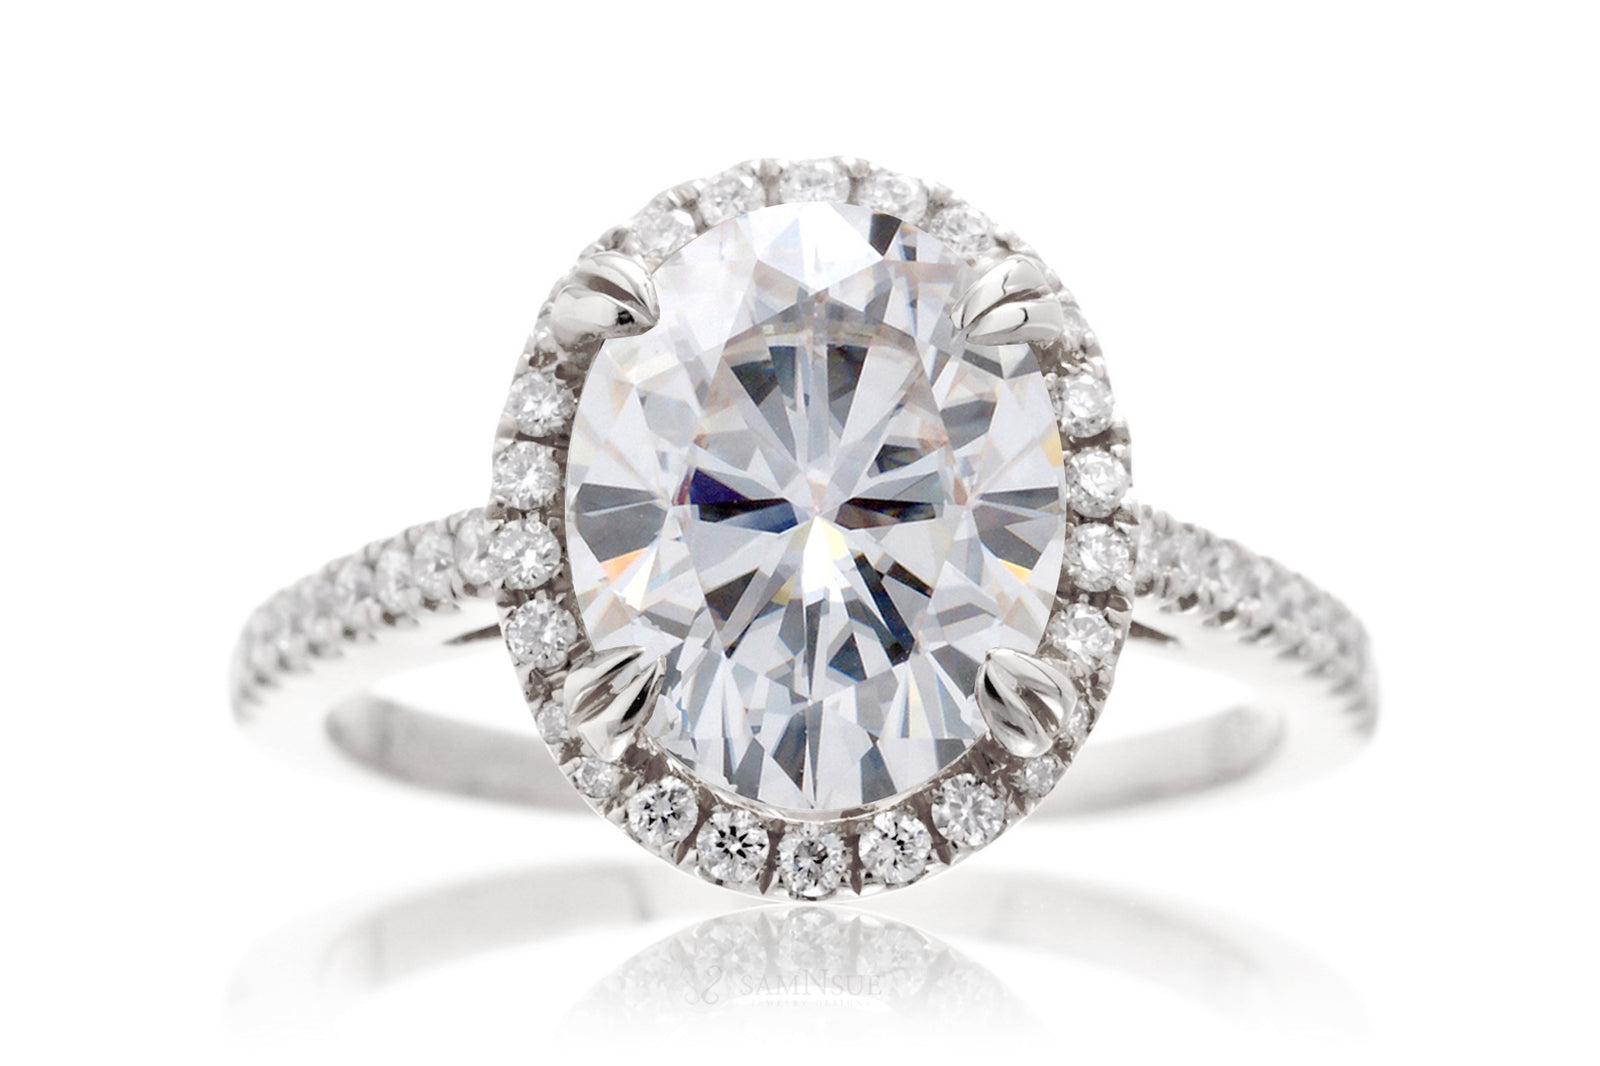 The Signature Oval Moissanite Diamond Halo Engagement Ring